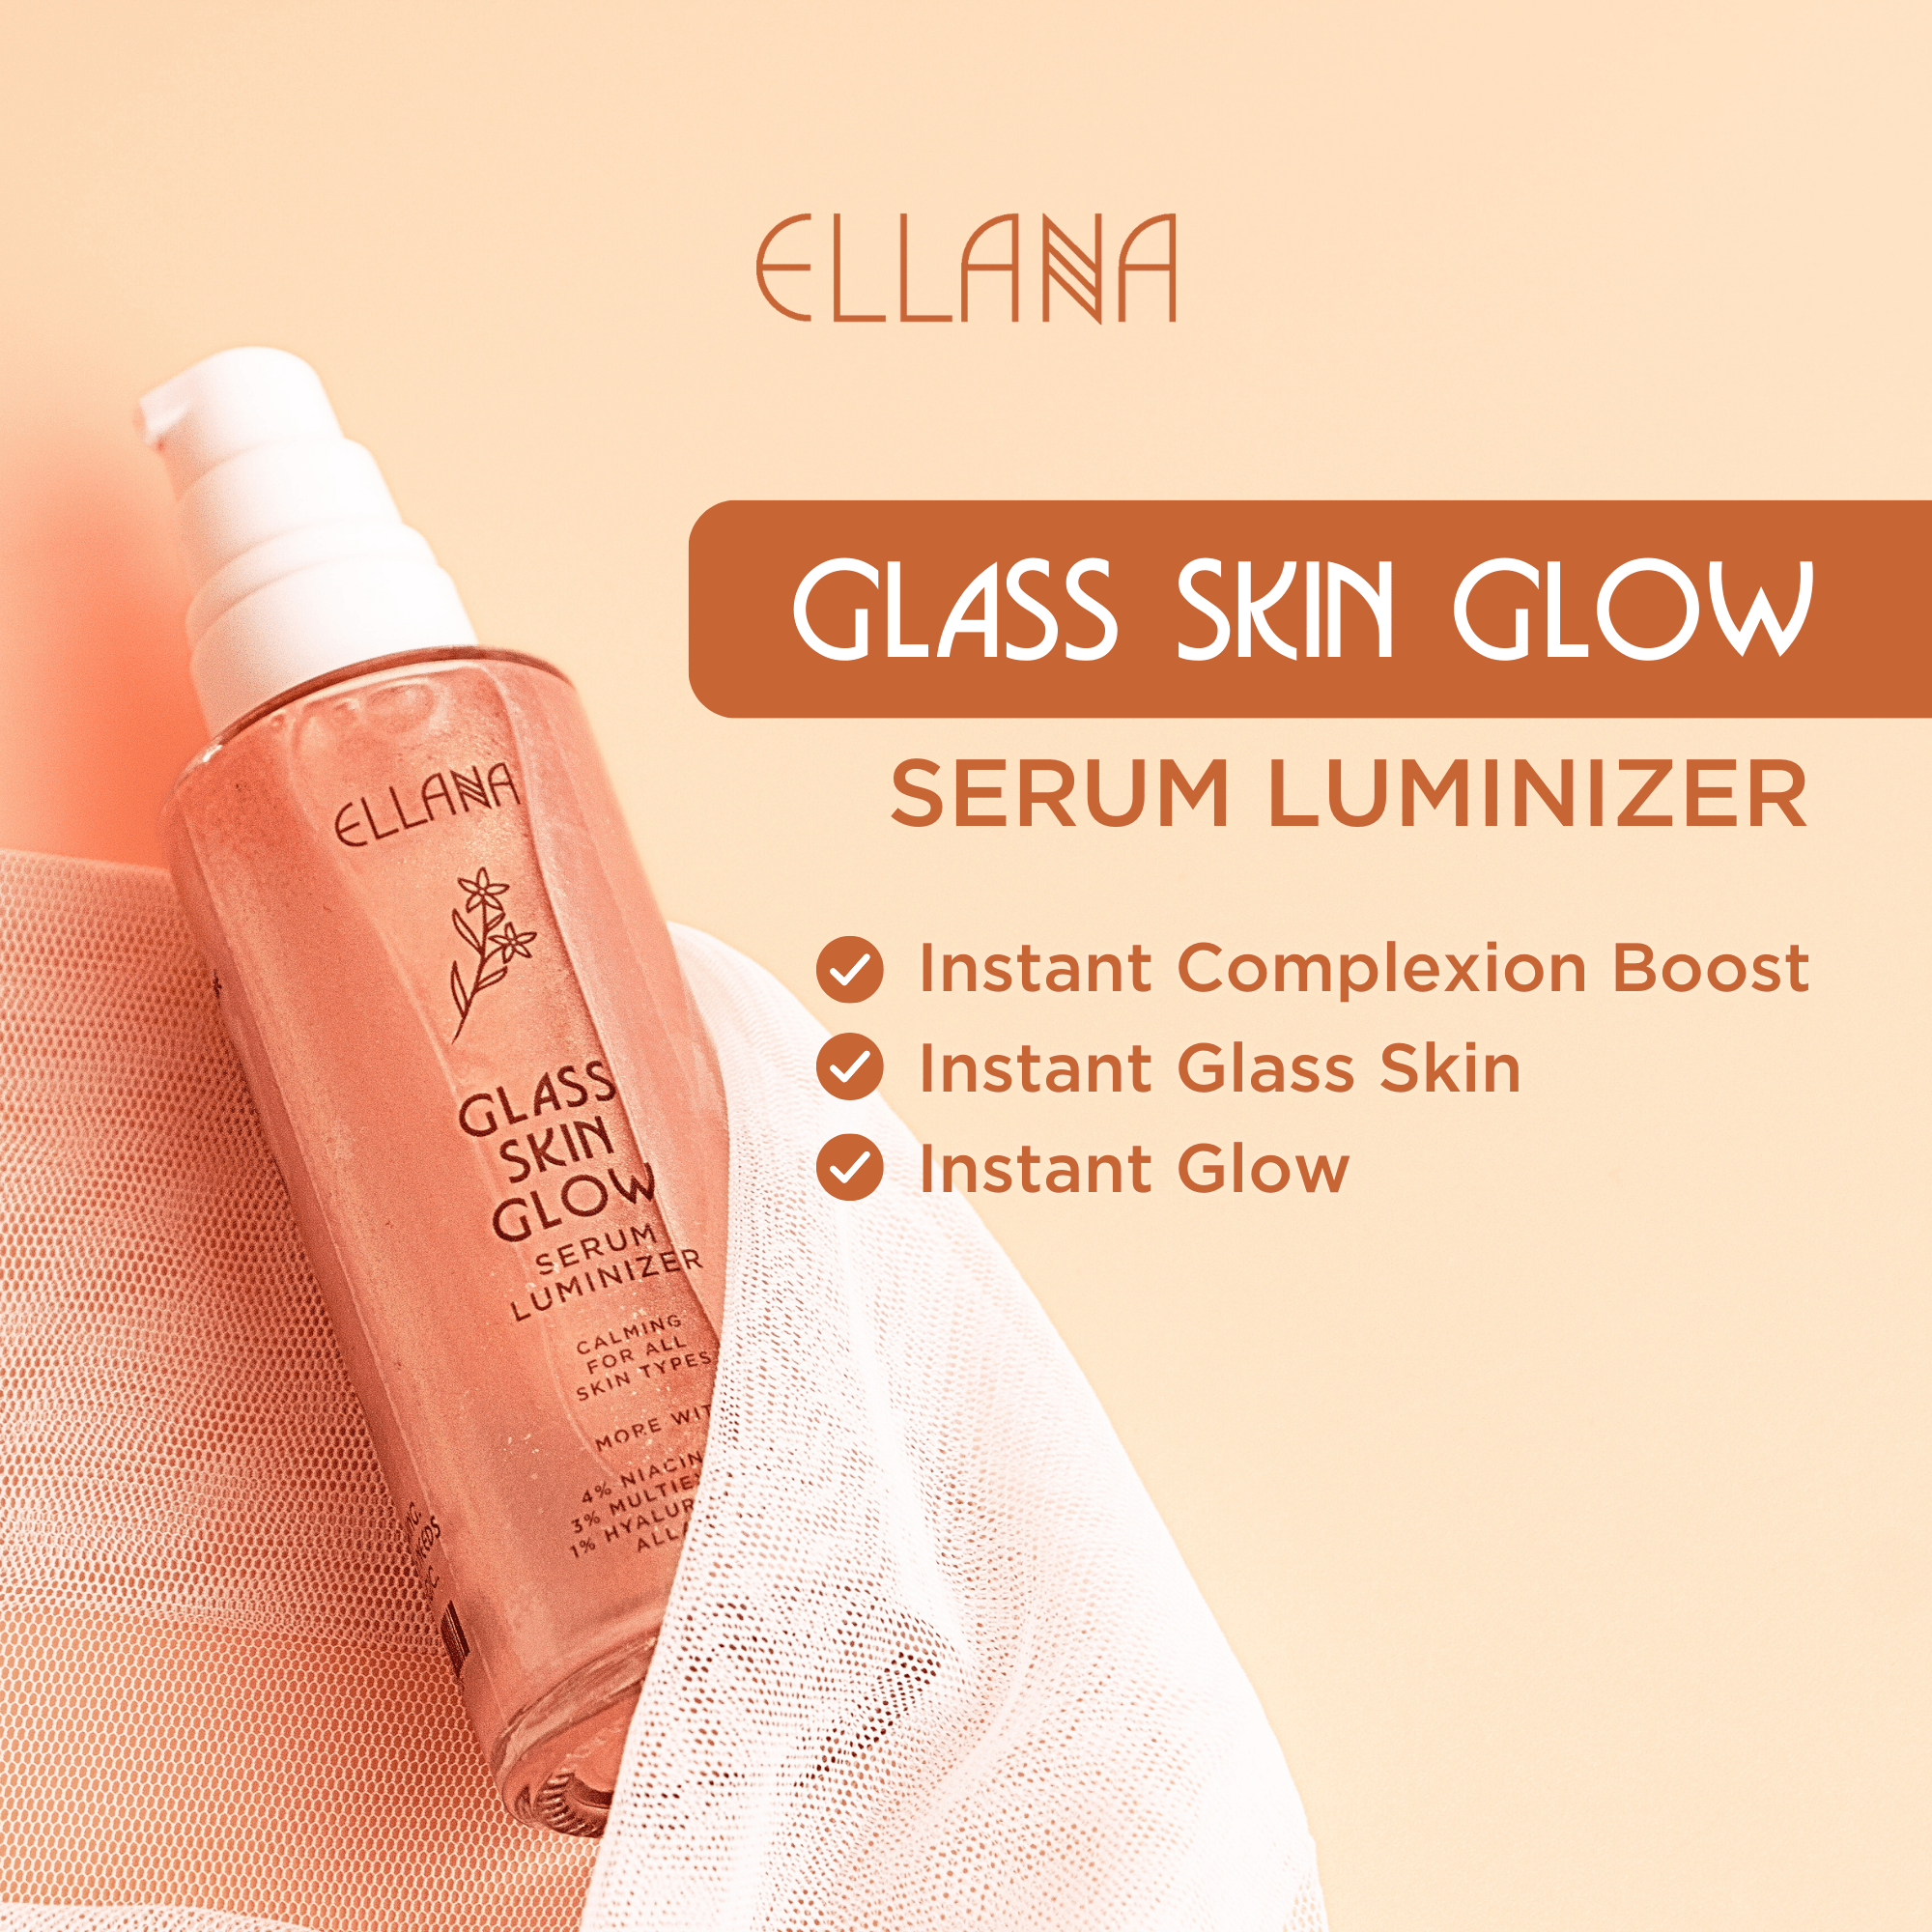 Glass Skin Glow Serum Luminizer made with 4% Vitamin B3, 3% Multiex BSASM, 1% Hyaluronic Acid, Allantoin